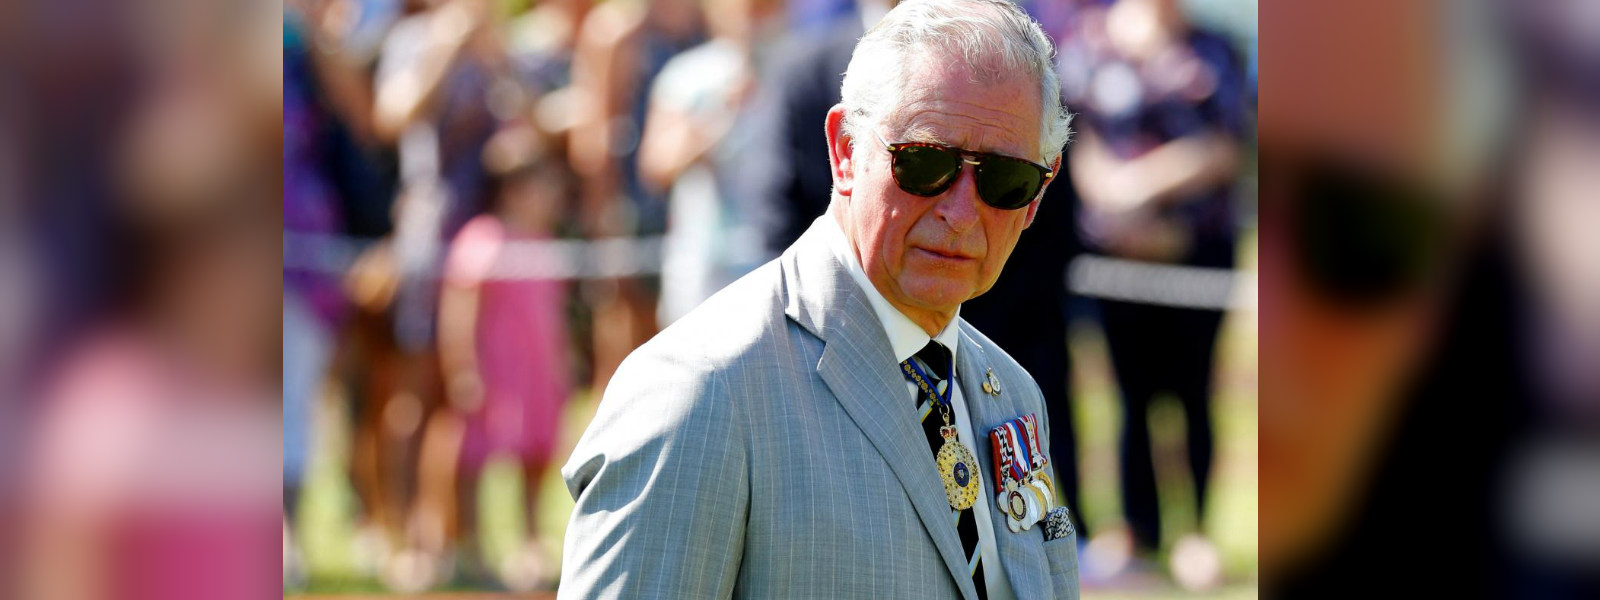 Britain's Prince Charles turns 70 